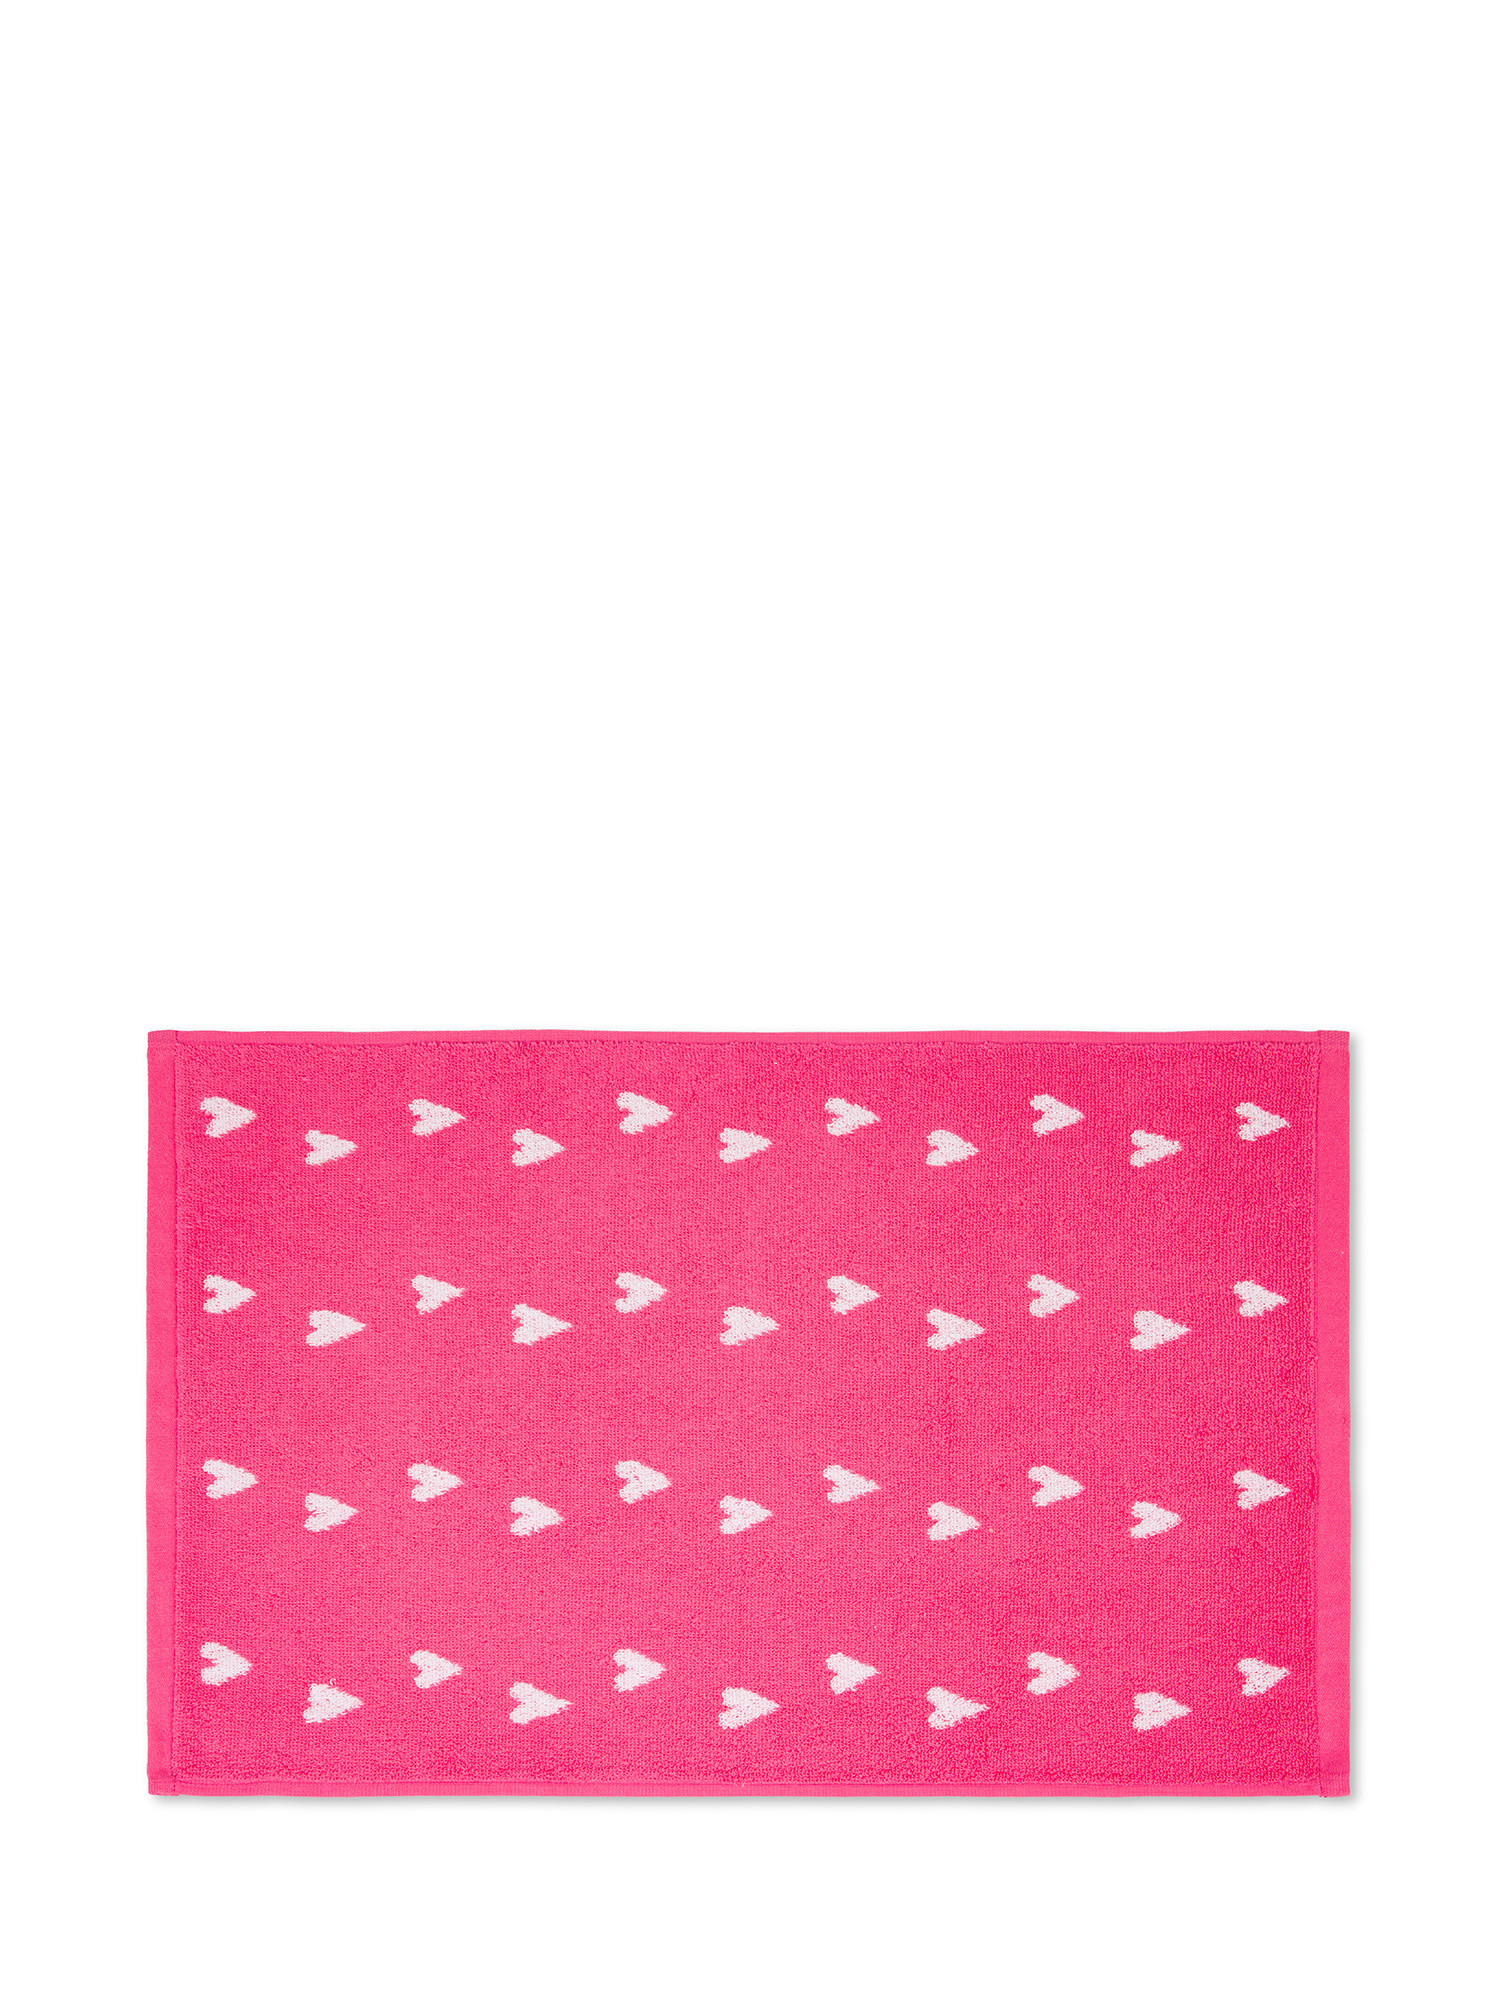 Asciugamano in spugna di cotone motivo cuoricini, Rosa, large image number 1